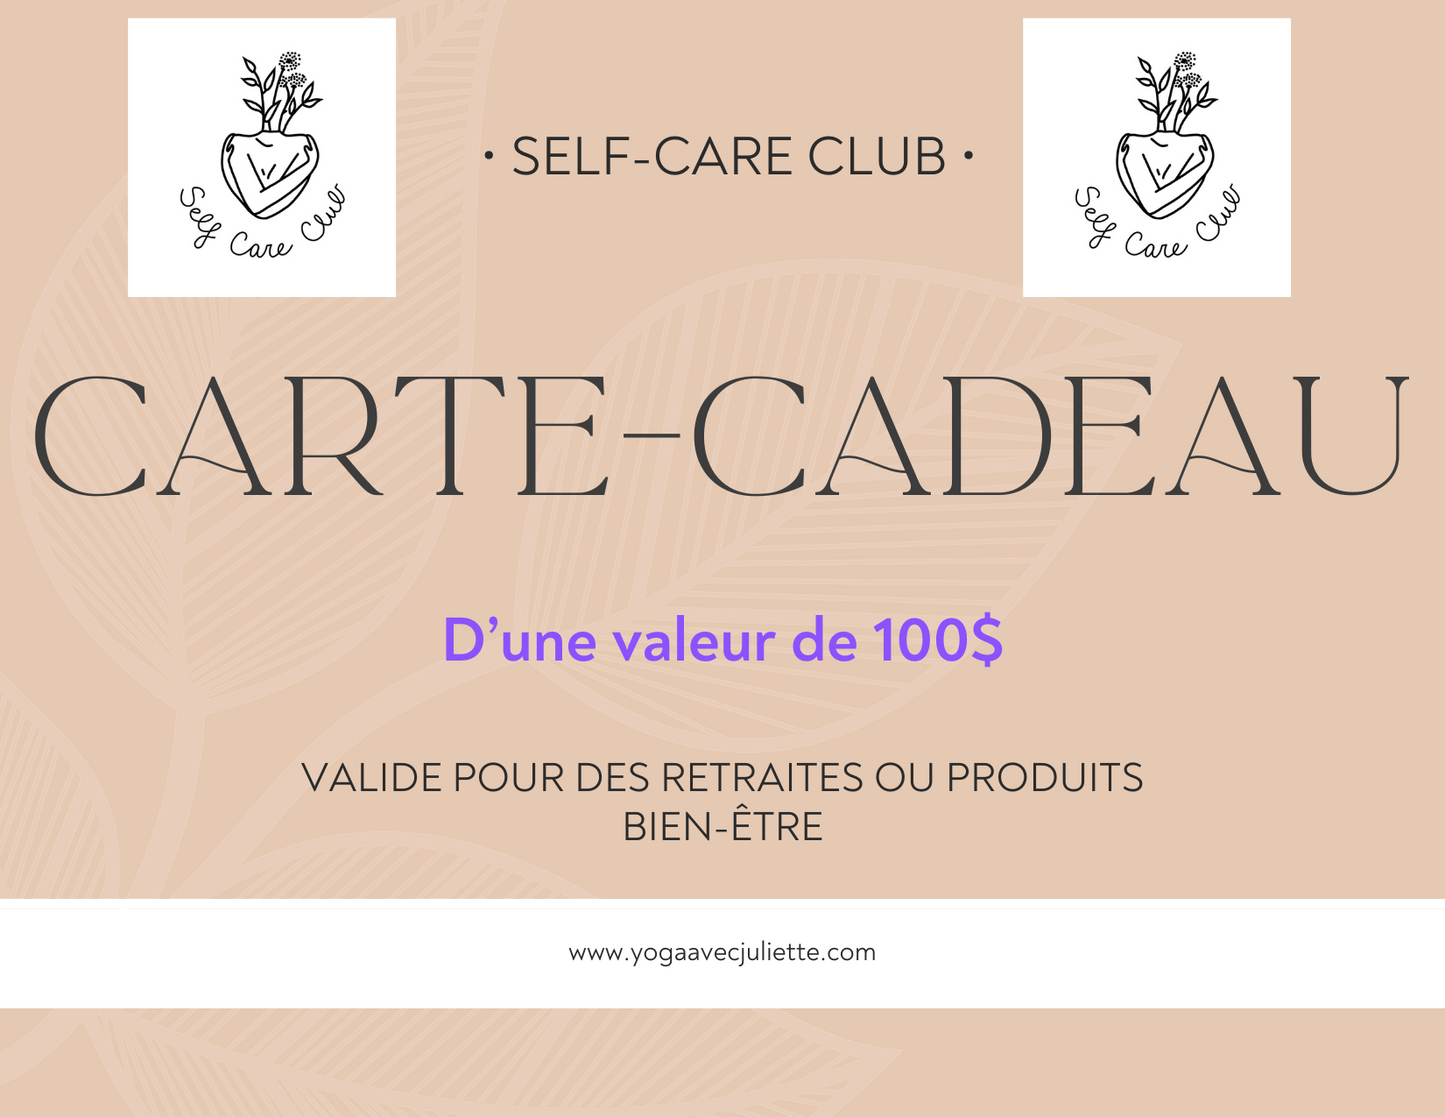 Carte-cadeau Self-Care Club